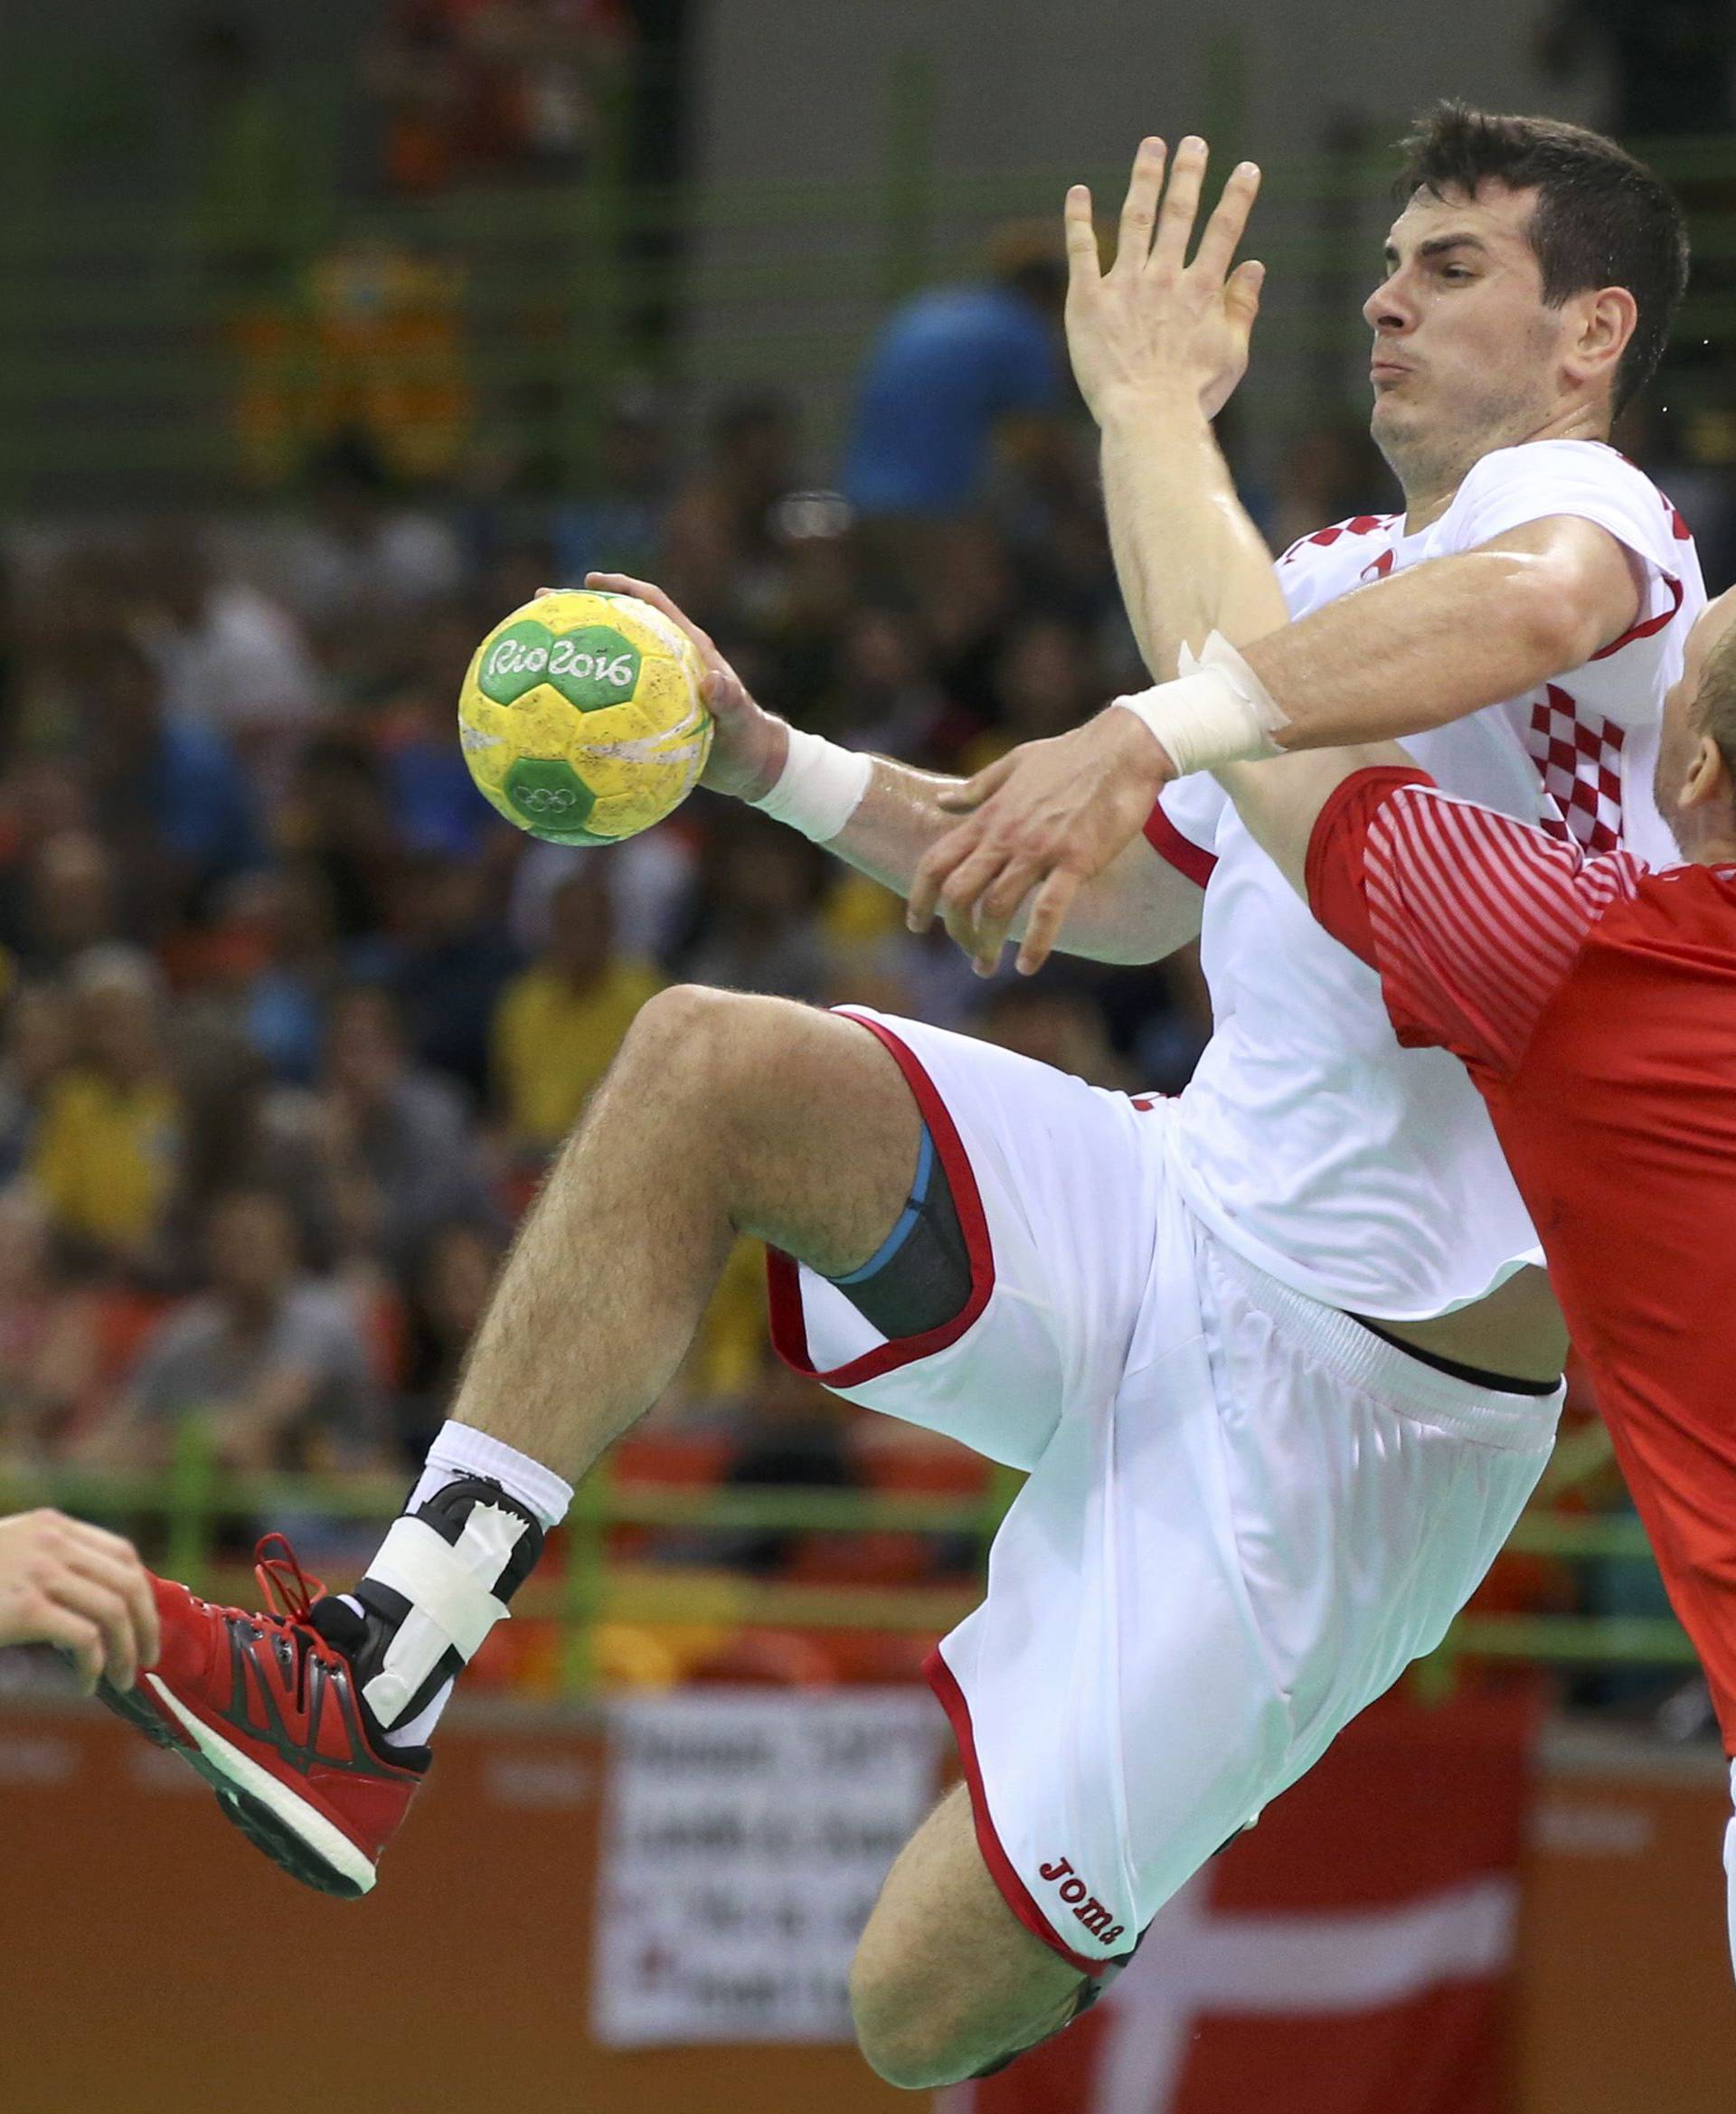 Handball - Men's Preliminary Group A Denmark v Croatia